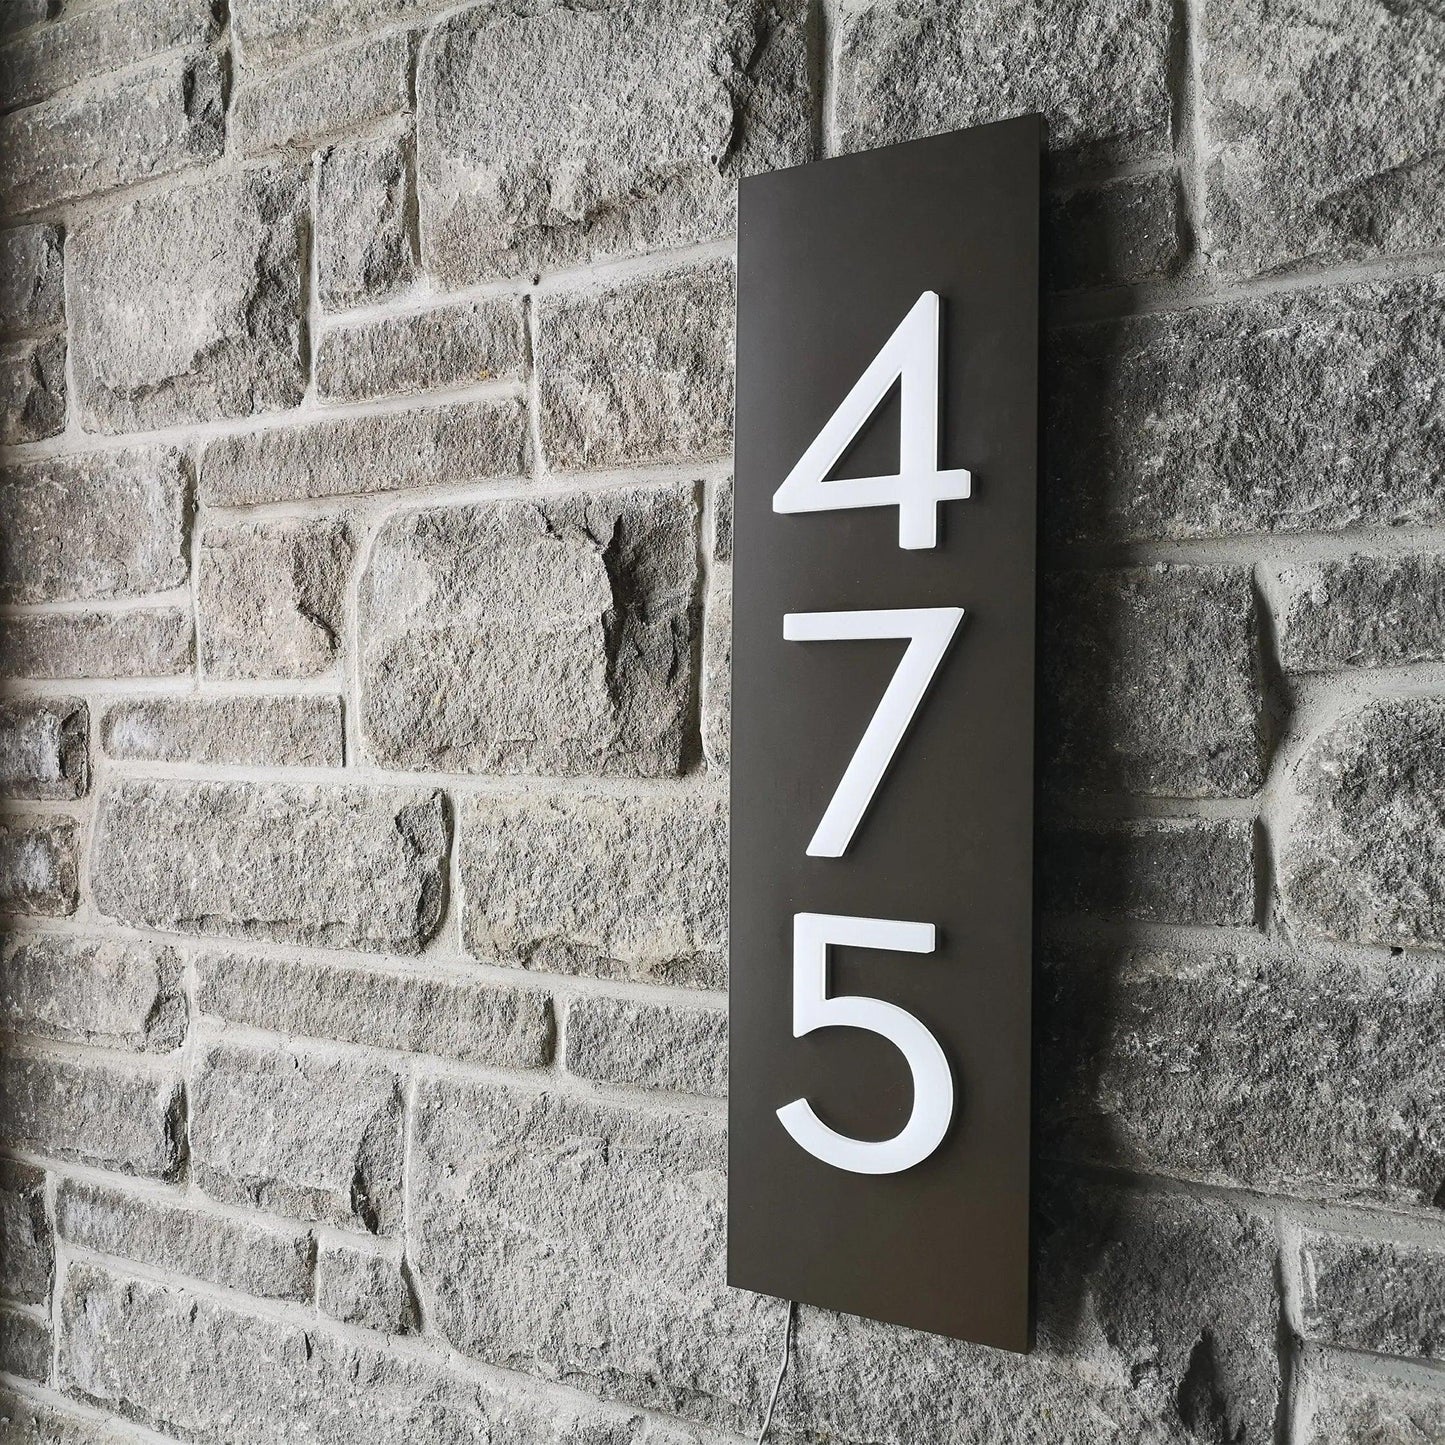 House numbers Vertical Sign Custom light Acrylic Home Door Decor Illuminated Address Street 3D Sign - FYLZGO Signs